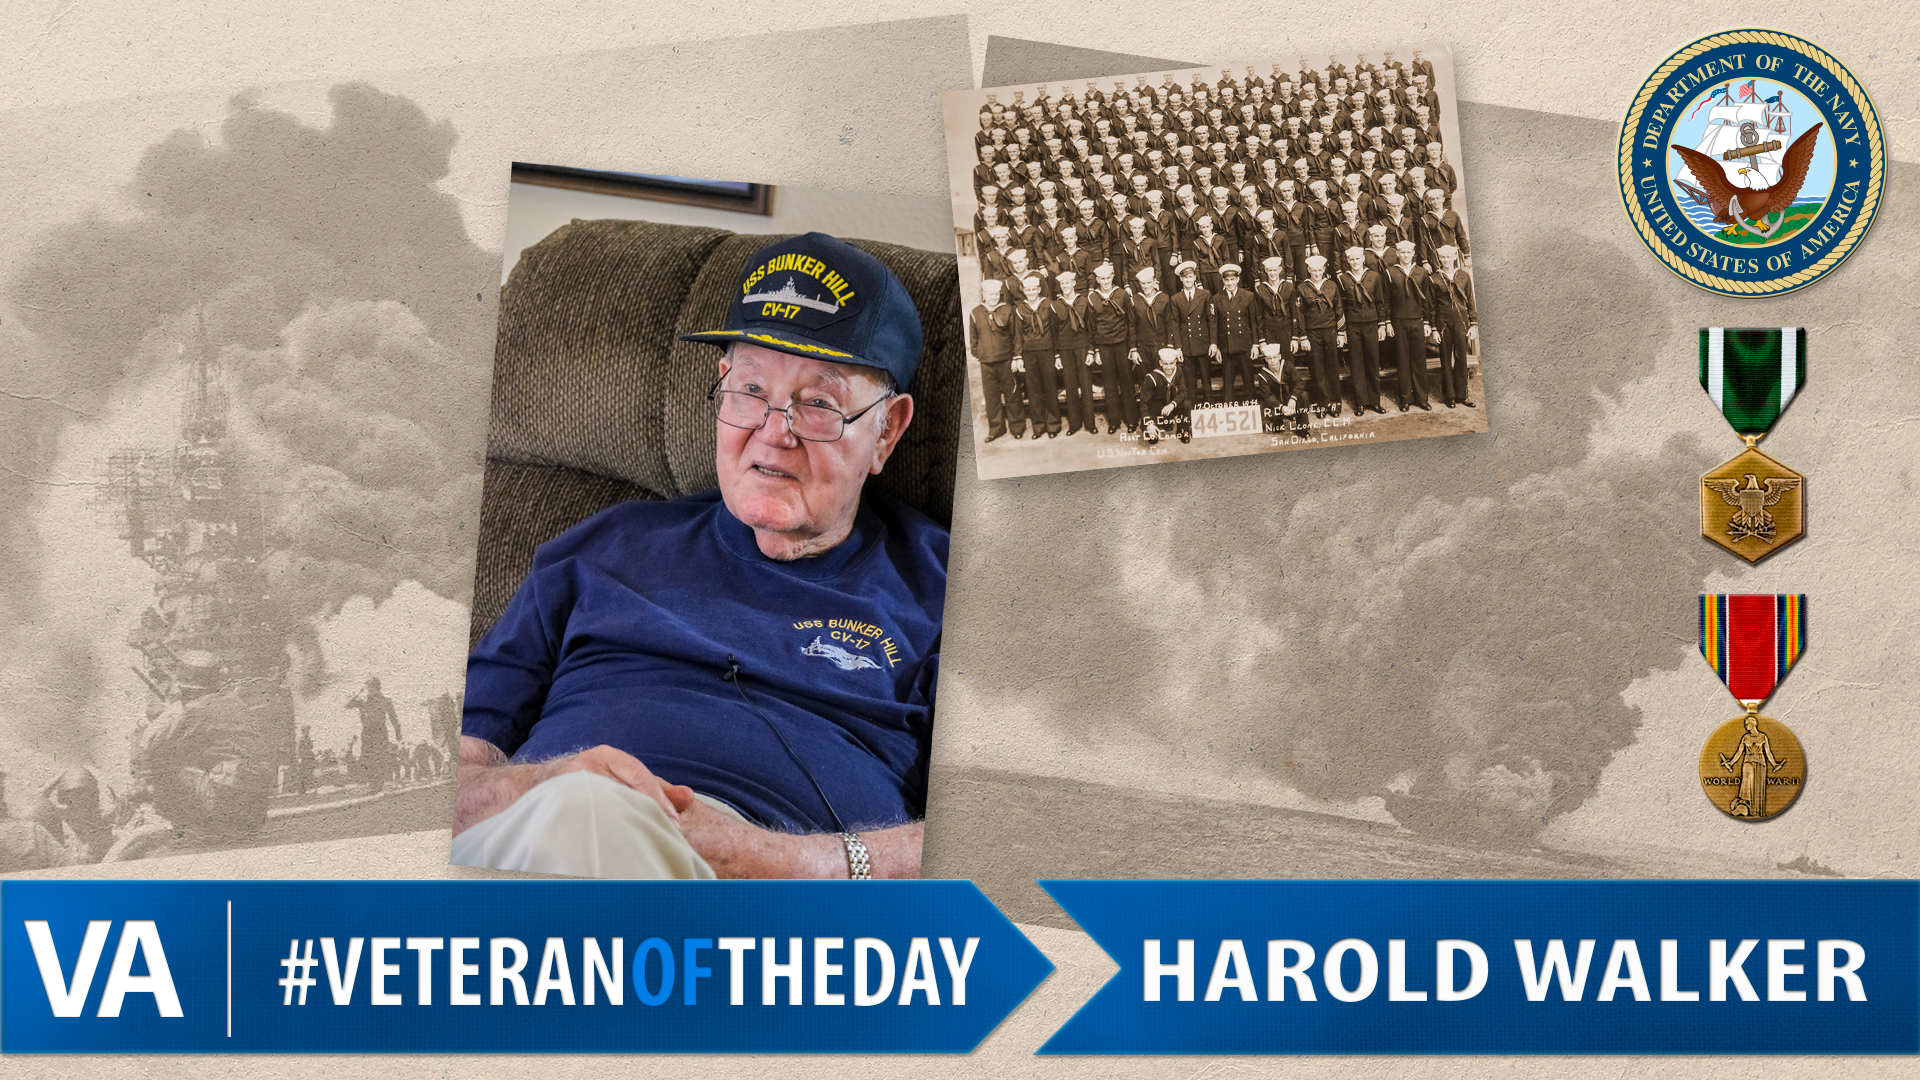 Harold Walker - Veteran of the Day